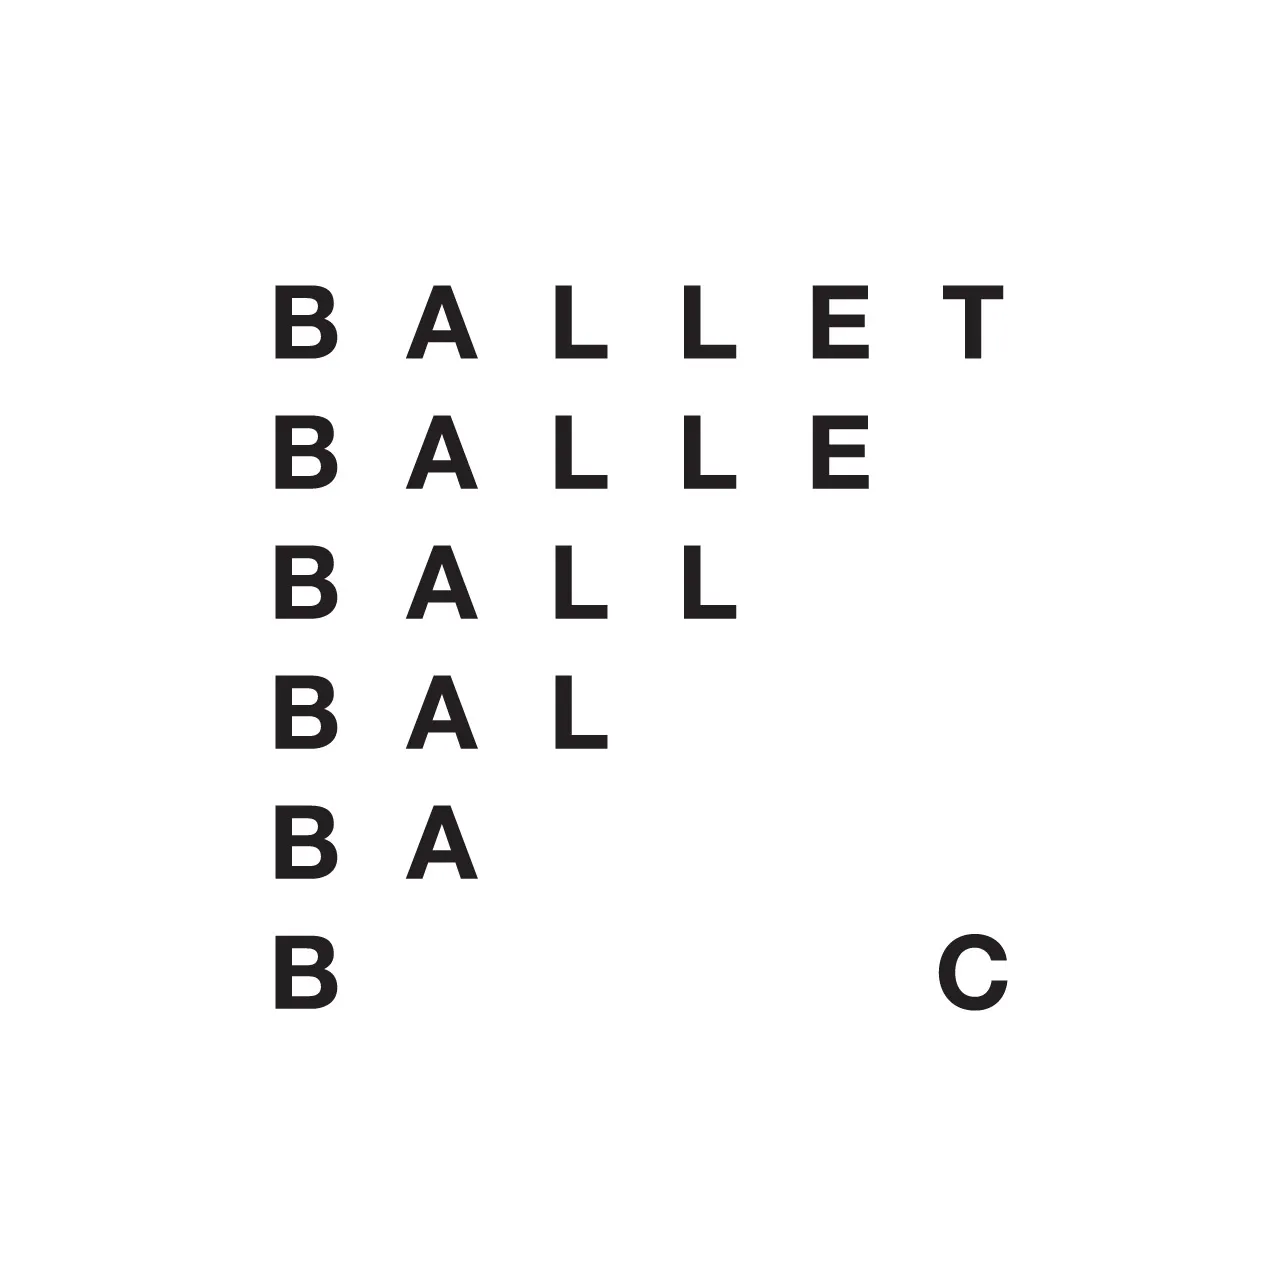 Ballet BC: Now